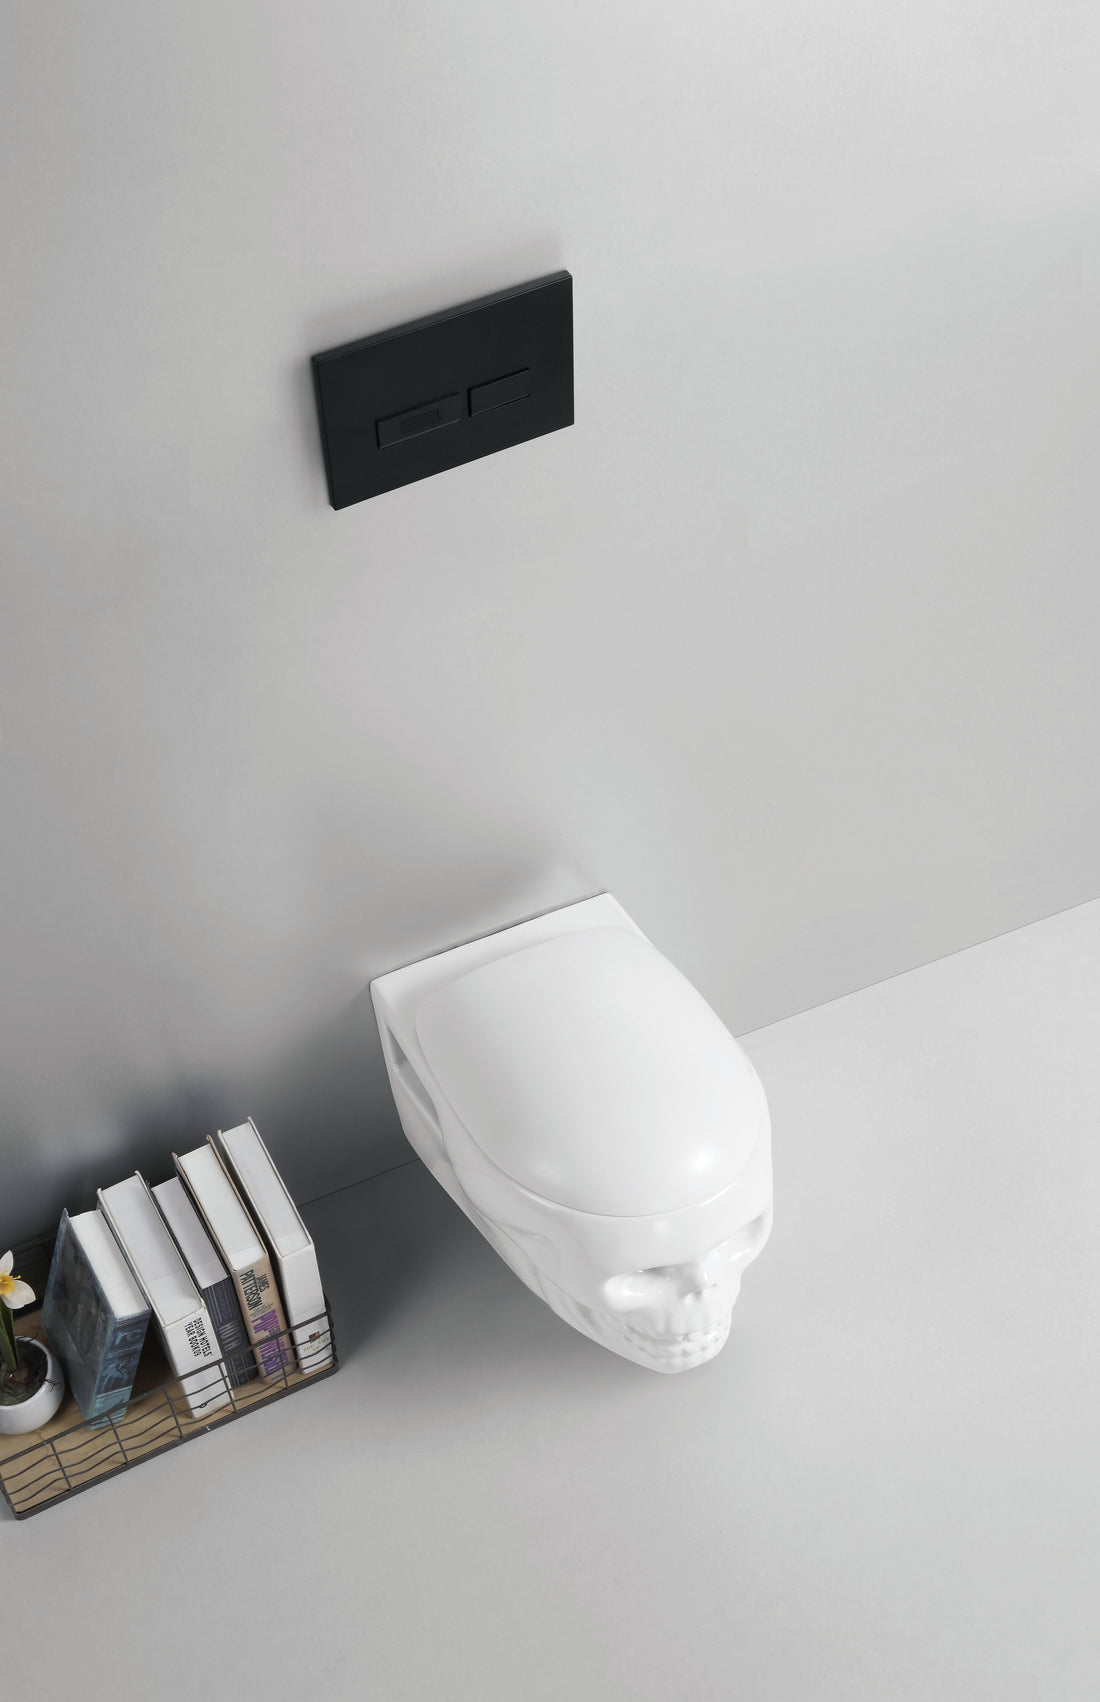 The skull design toilet from Ringfi bathroom